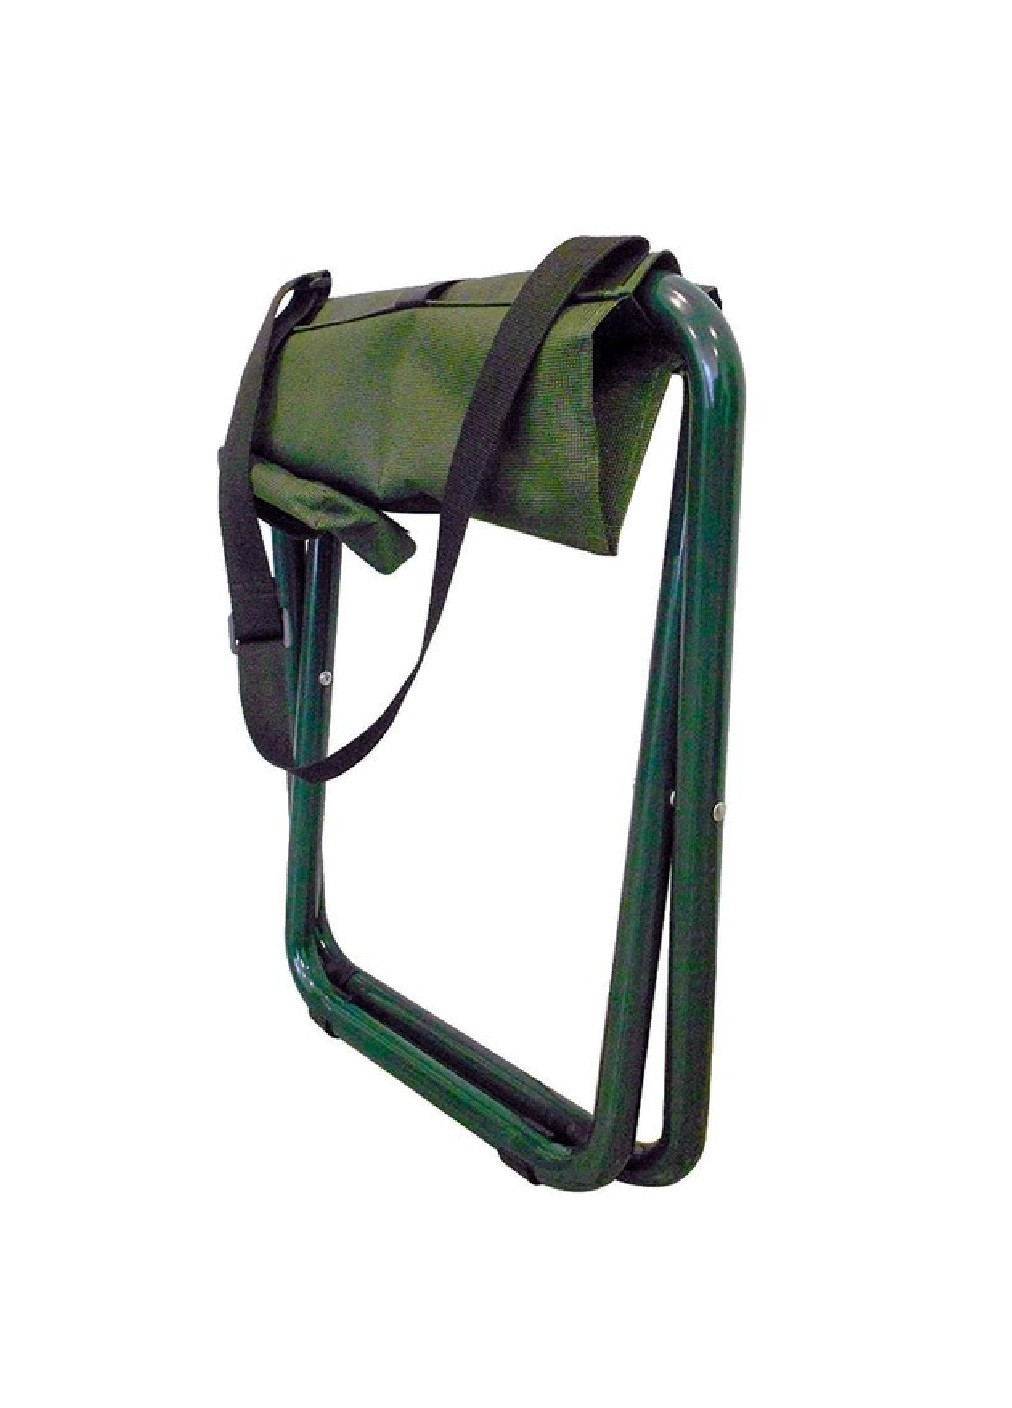 Раскладной легкий стул без спинки для отдыха дачи рыбалки туризма кемпинга 39х33,5х42 см (475299-Prob) Зеленый Unbranded (265391206)